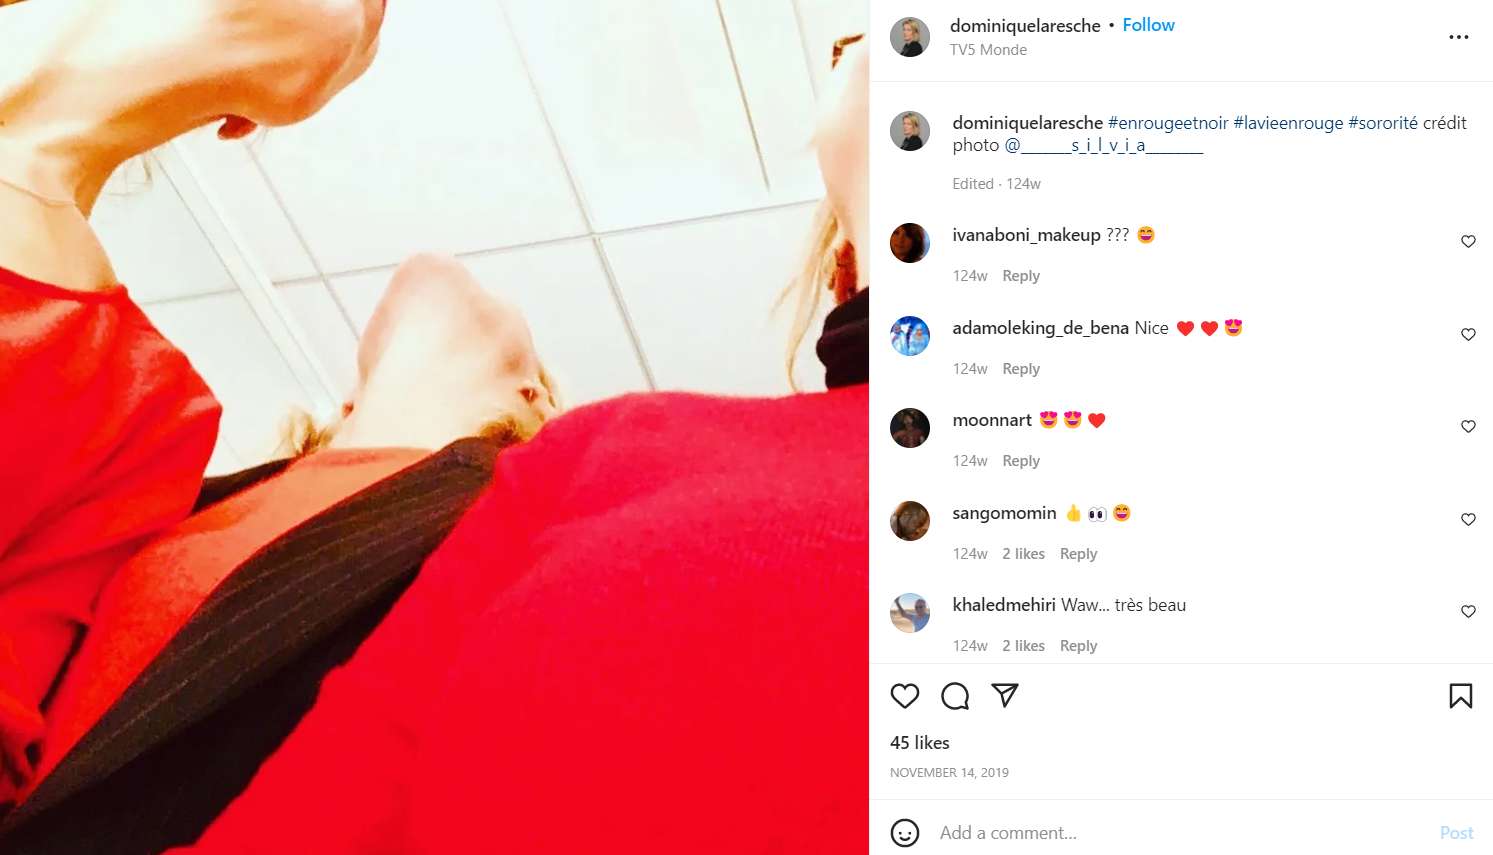 Dominique Laresche's first Instagram post